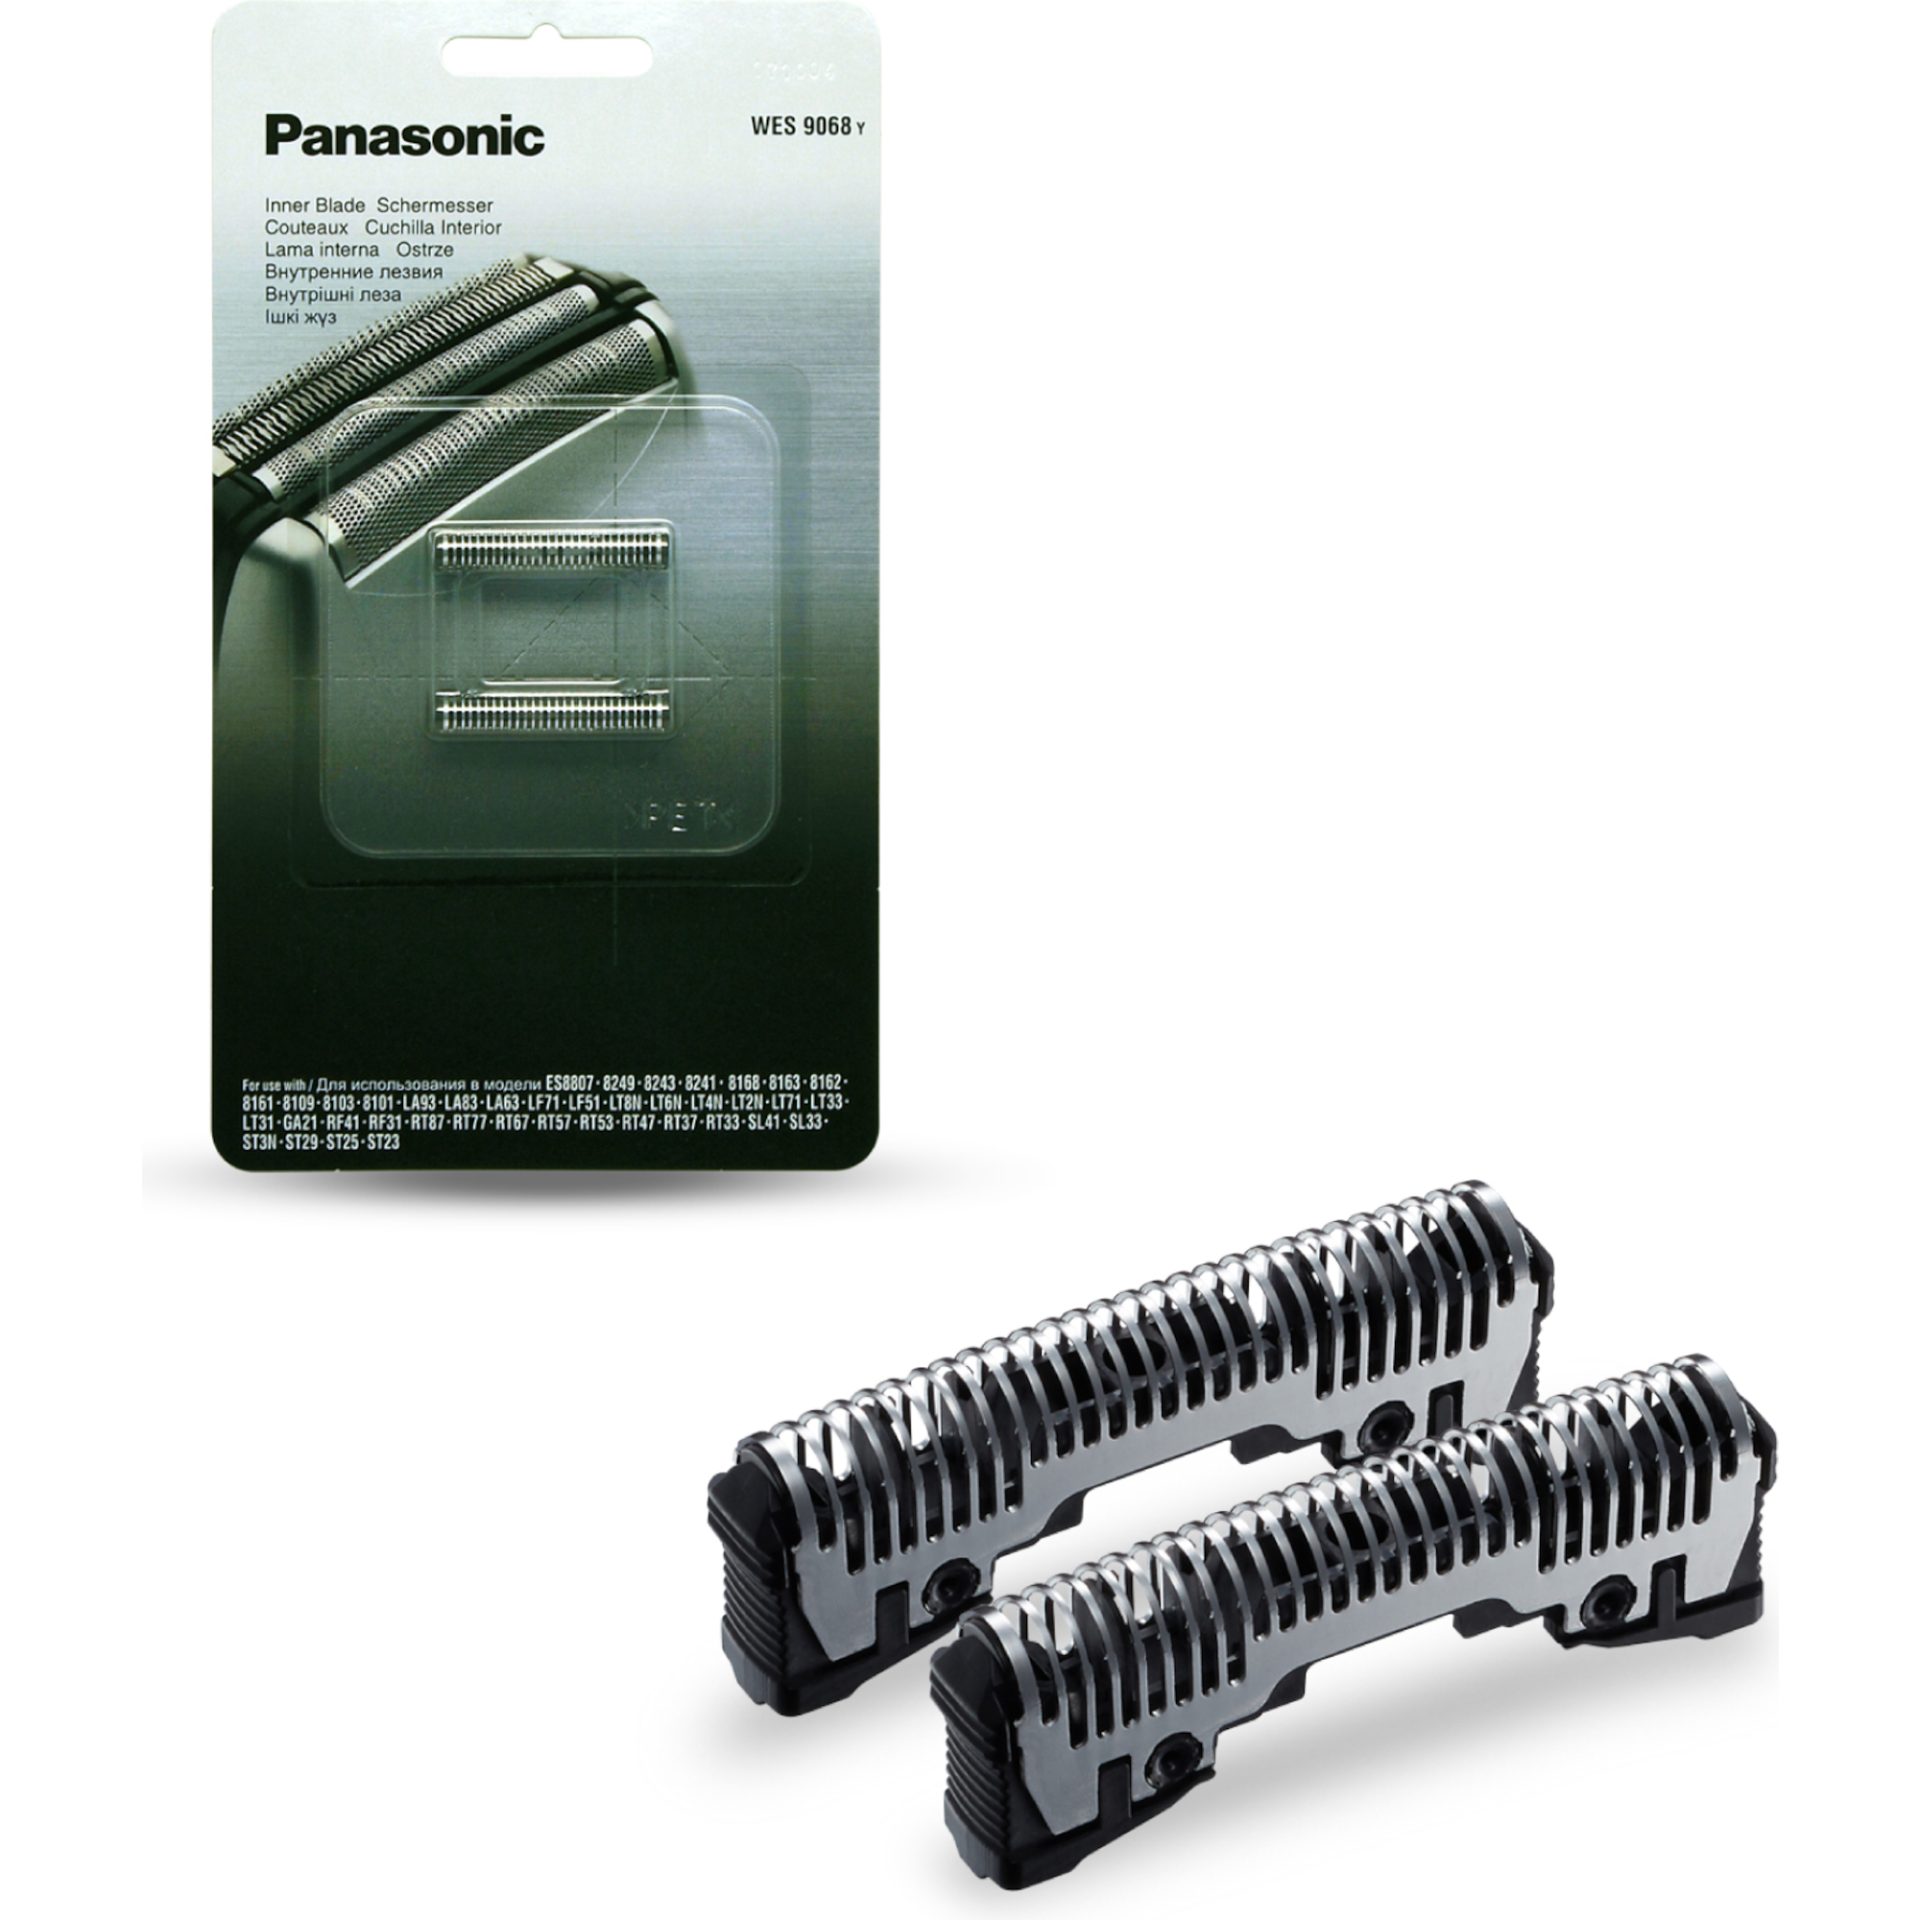 Panasonic WES9068 náhradní čepel pro holicí strojek (pro modely: ES-LA93, LA83, LA63, RF41, RF31, LF71, LF51, LT6N, LT4N, LL41, LL21, GA21, LT71, RT87